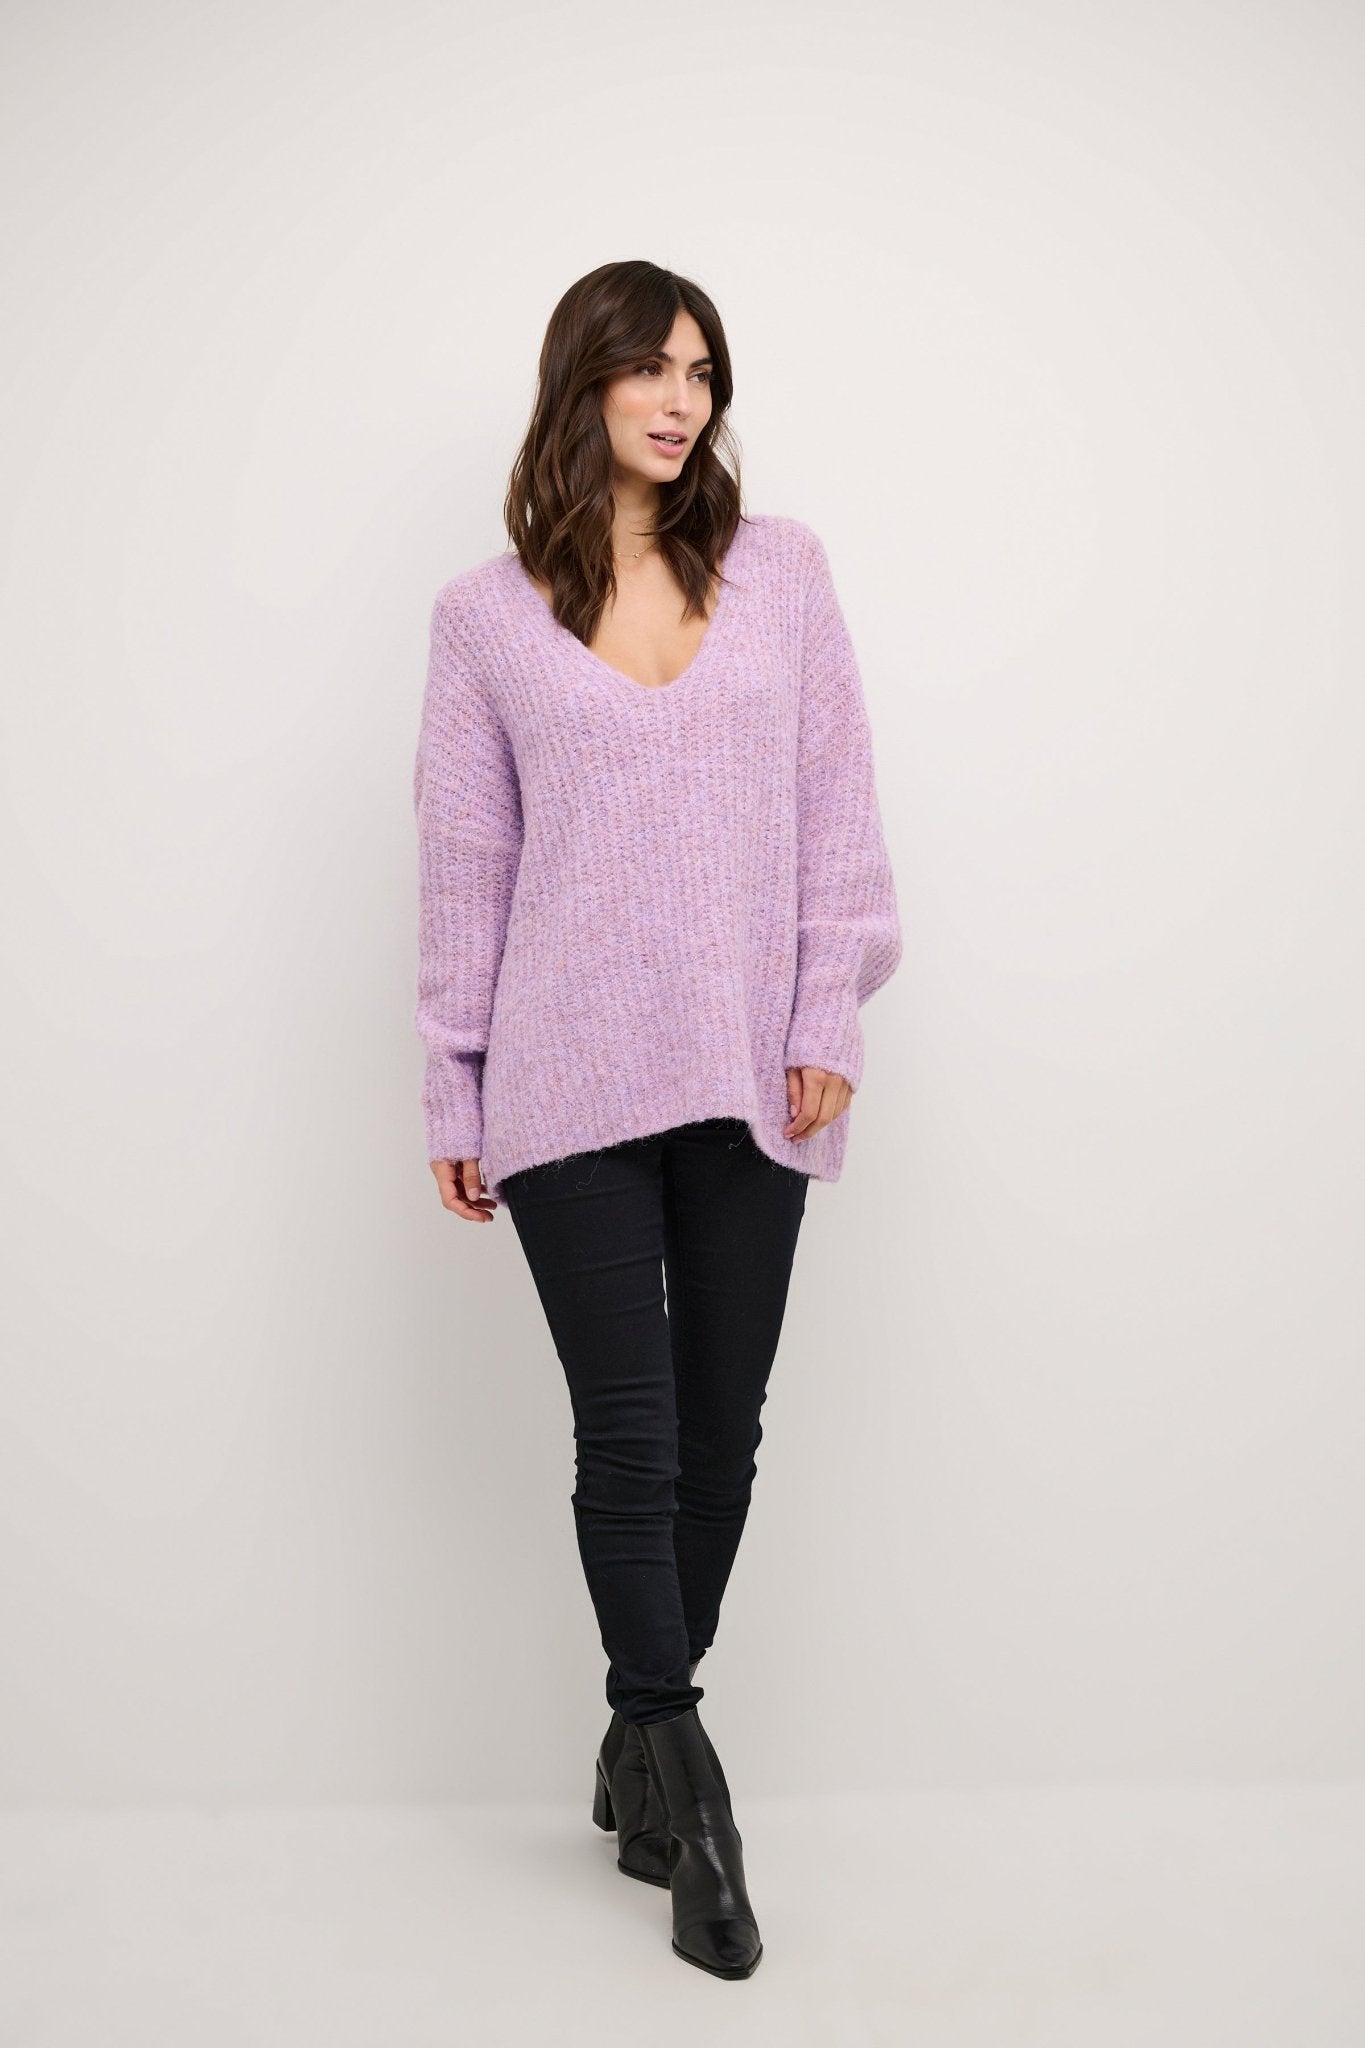 Brava knit pullover by Culture - Orchid Melange - Blue Sky Fashions & Lingerie